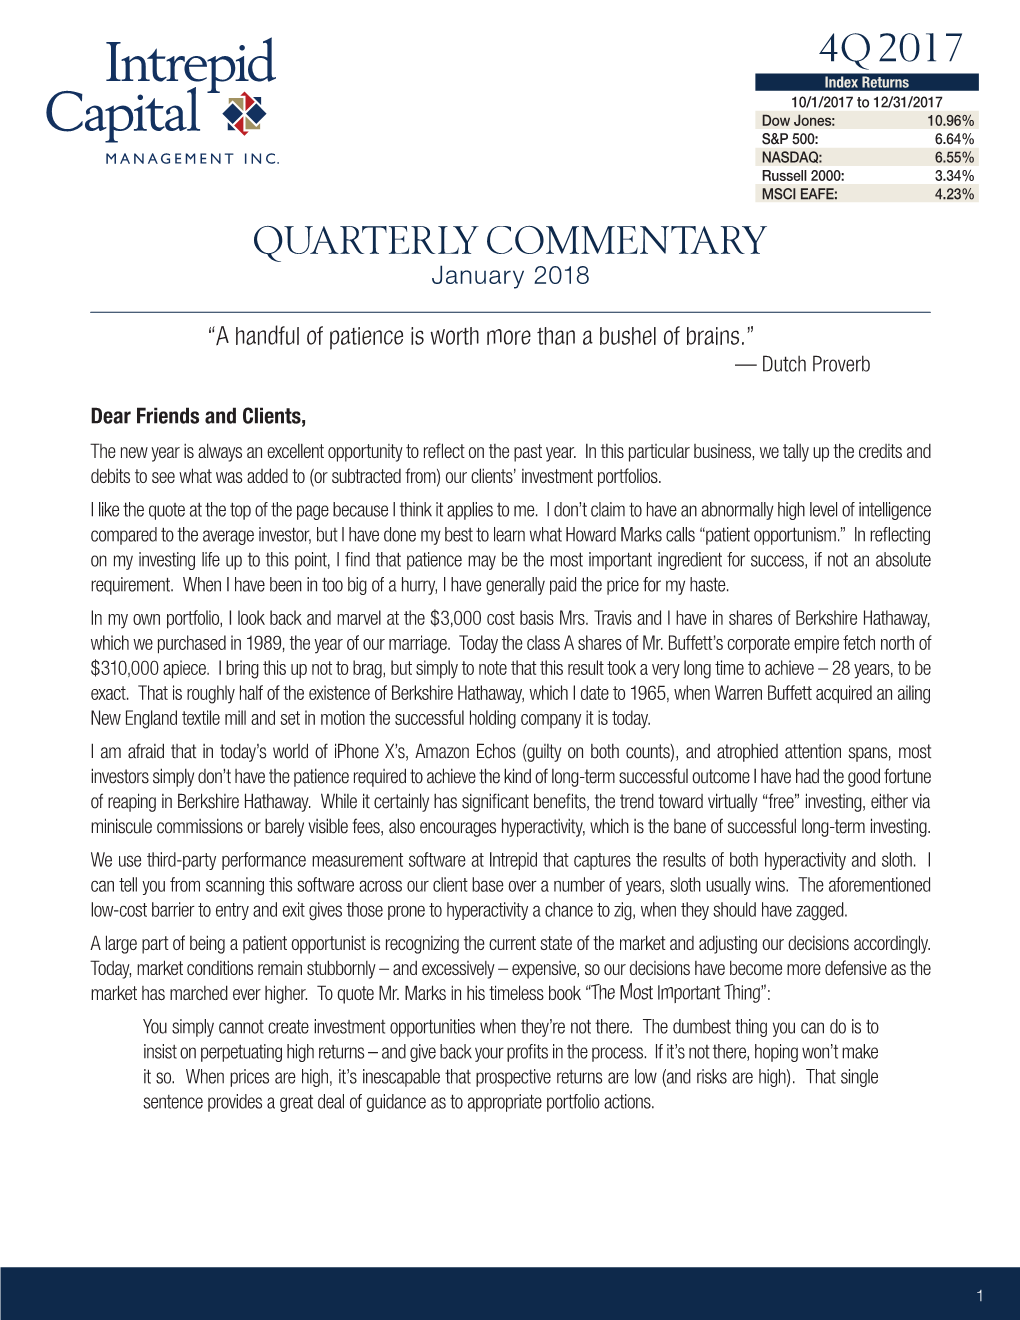 4Q 2017 Quarterly Commentary